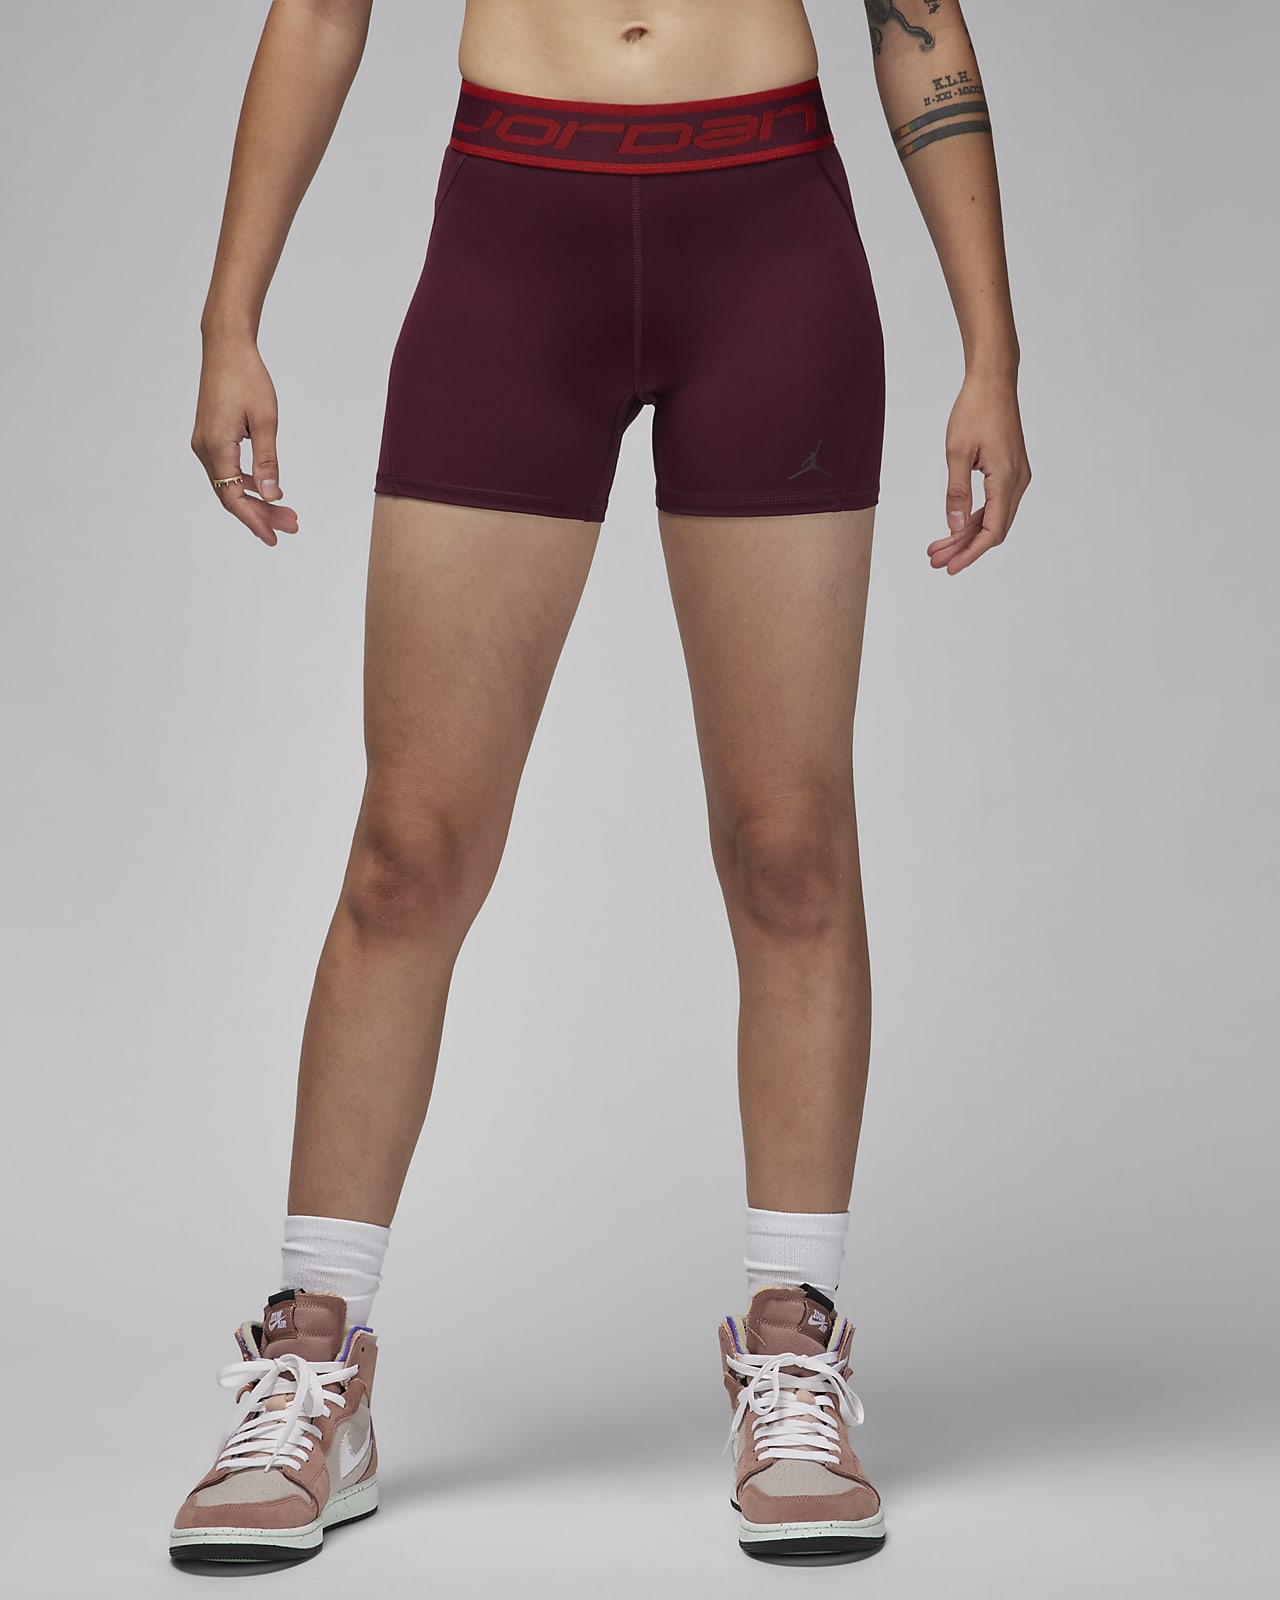 Jordan Sport Pantalons curts de 13 cm - Dona